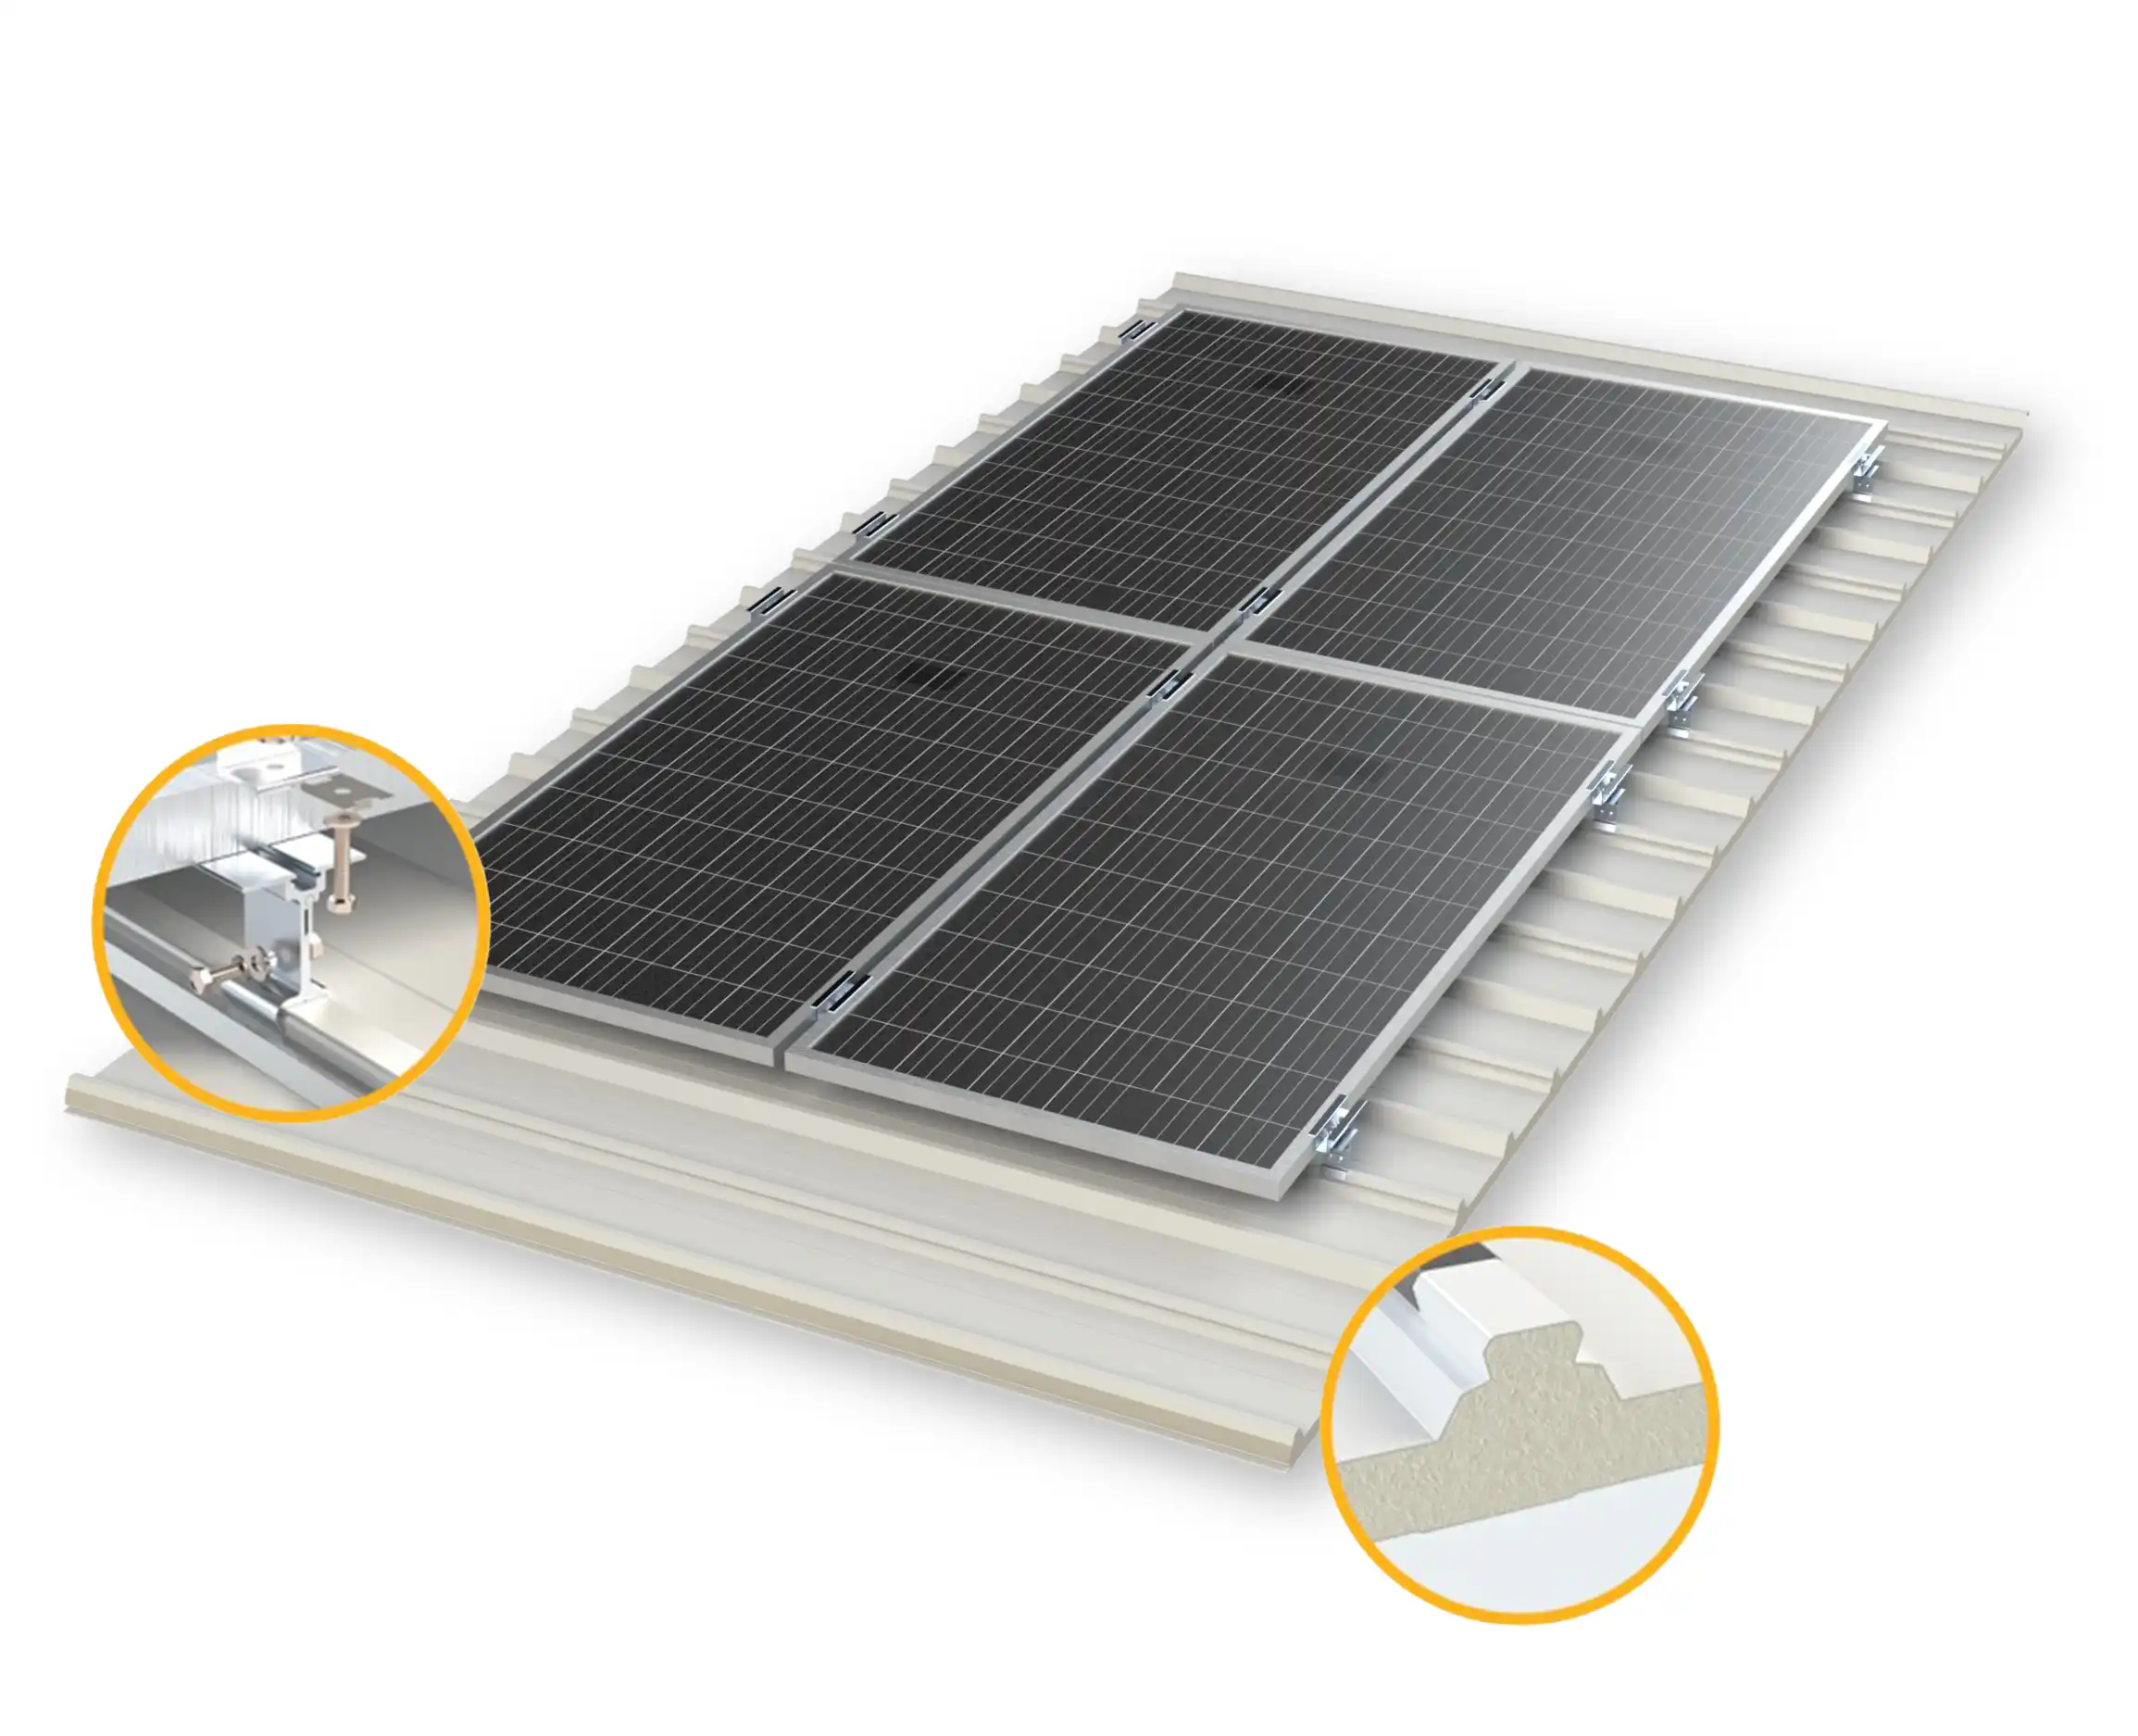 Kingspan Isoeste - Isorack - Sistema Sinergy - Placas Voltáicas - Deck - Energia Solar - Sustentabilidade - Economia - Tecnologia - Inovação - Kingspan Mercosul - Acabamento - Energia